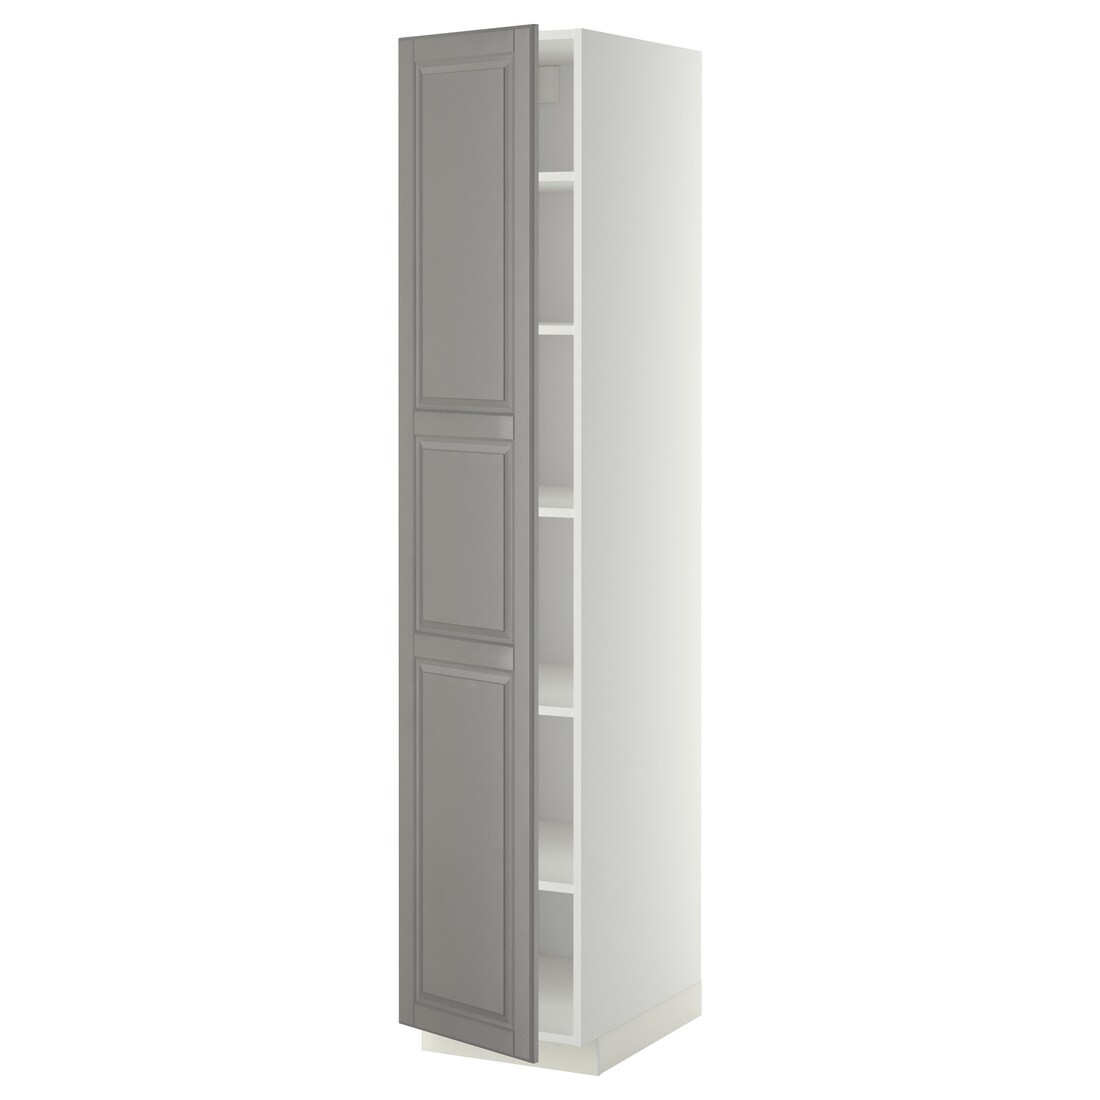 METOD МЕТОД Высокий шкаф с полками, белый / Bodbyn серый, 40x60x200 см